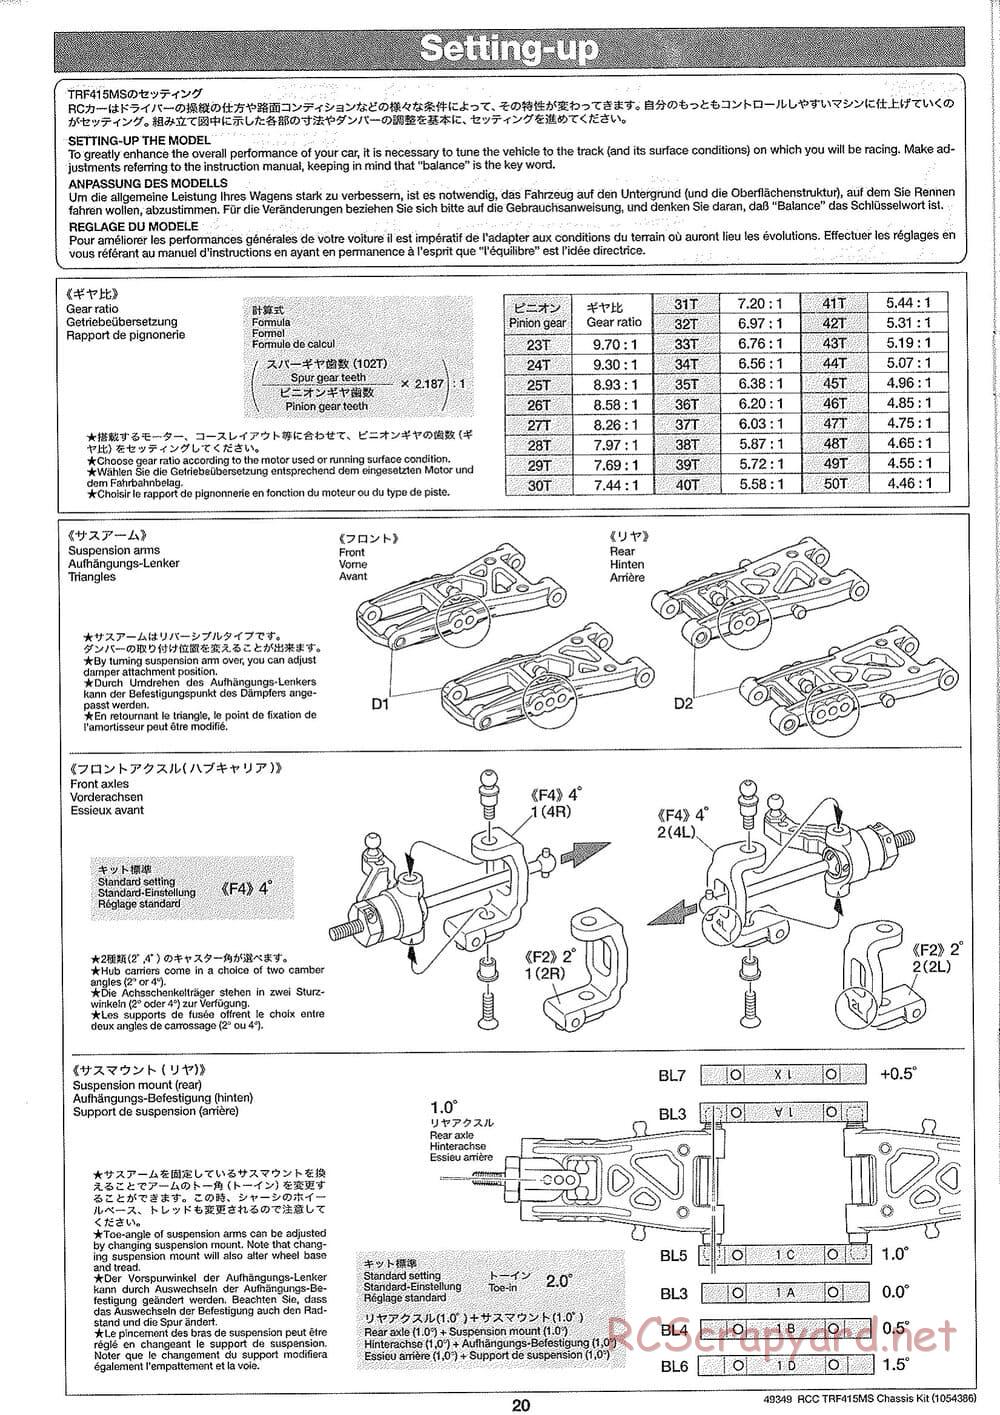 Tamiya - TRF415-MS Chassis - Manual - Page 20